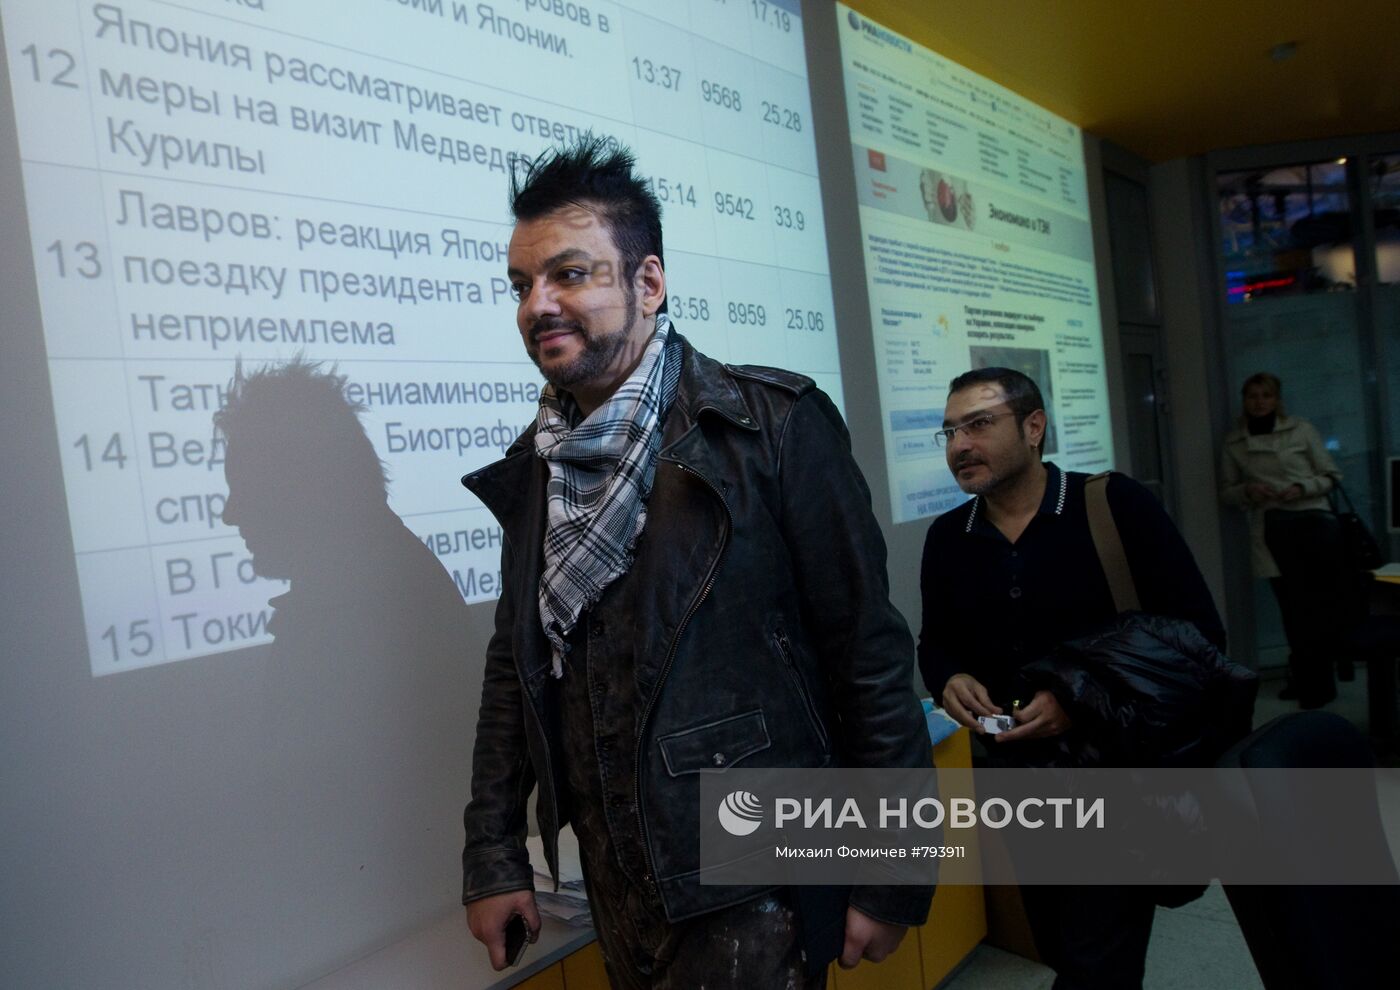 Филипп Киркоров на съемках передачи в РИА Новости